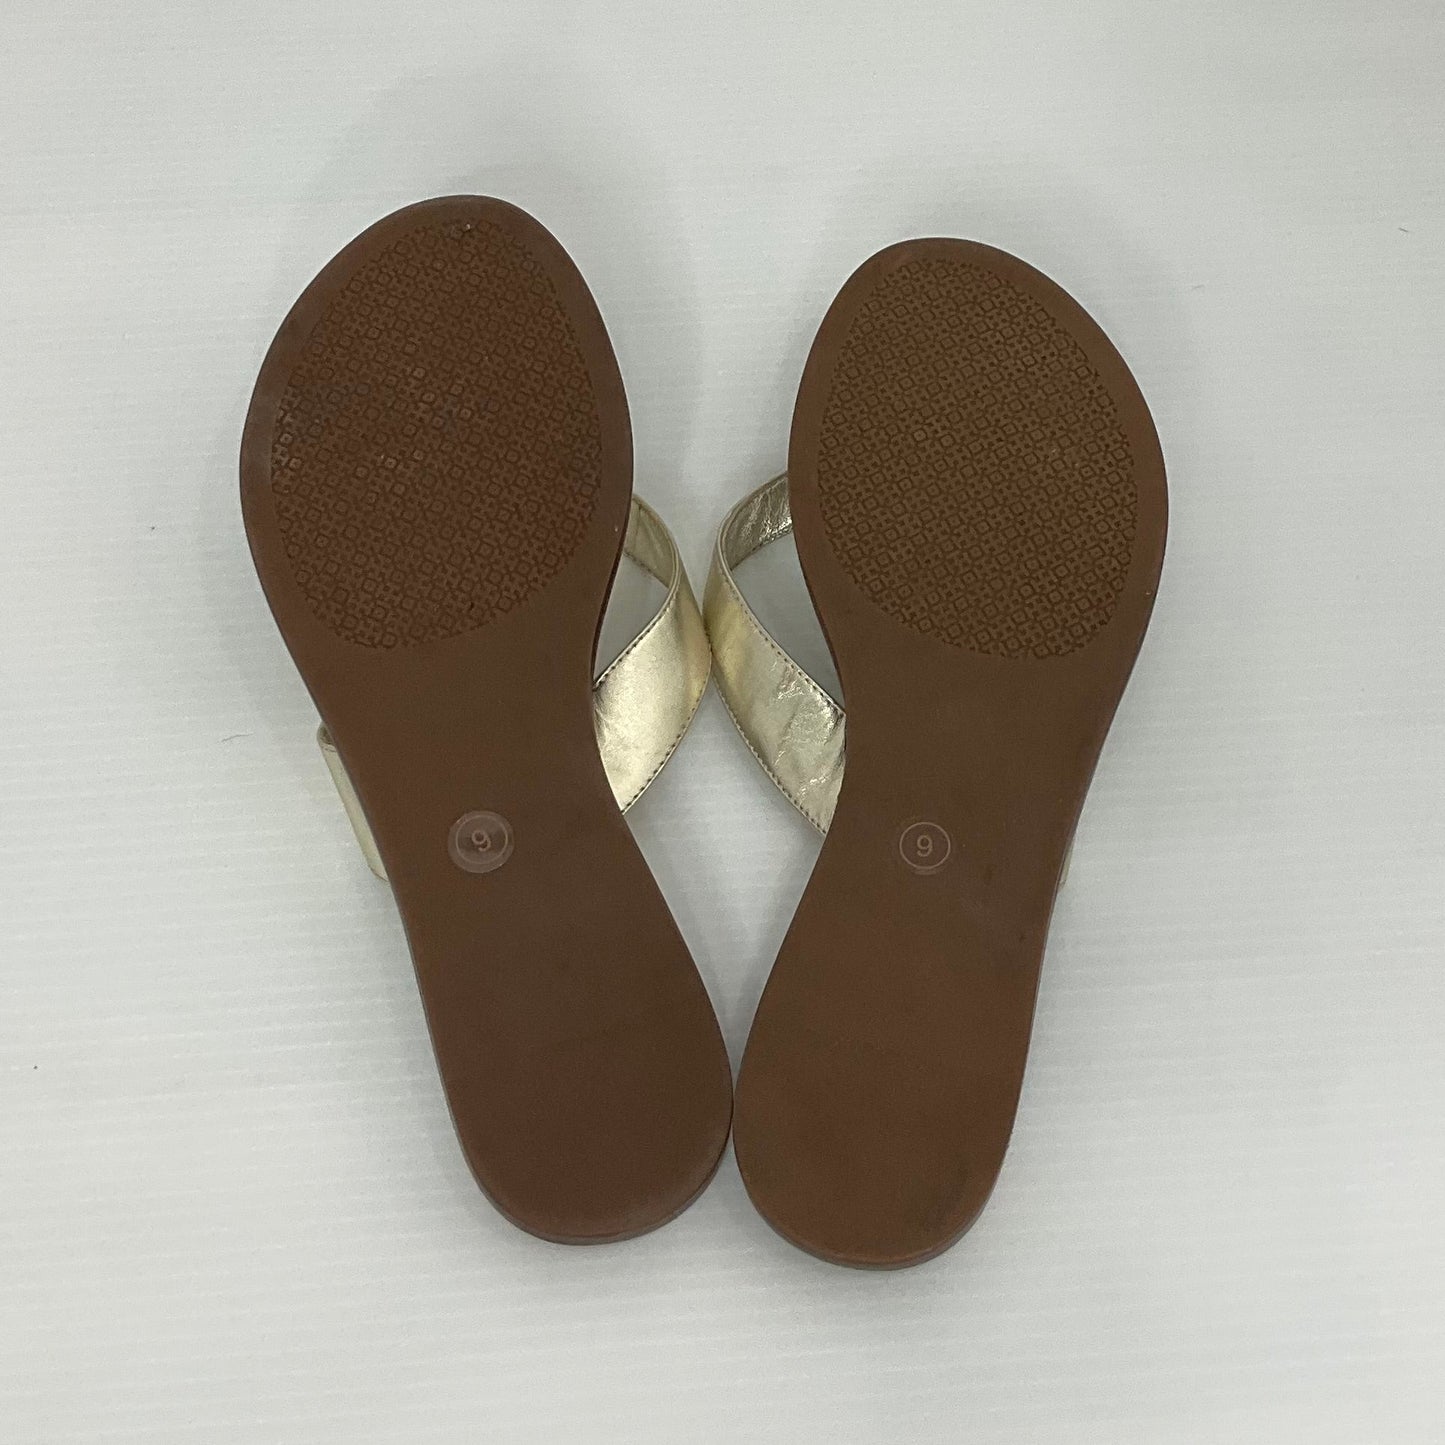 Gold Sandals Designer Tory Burch, Size 9